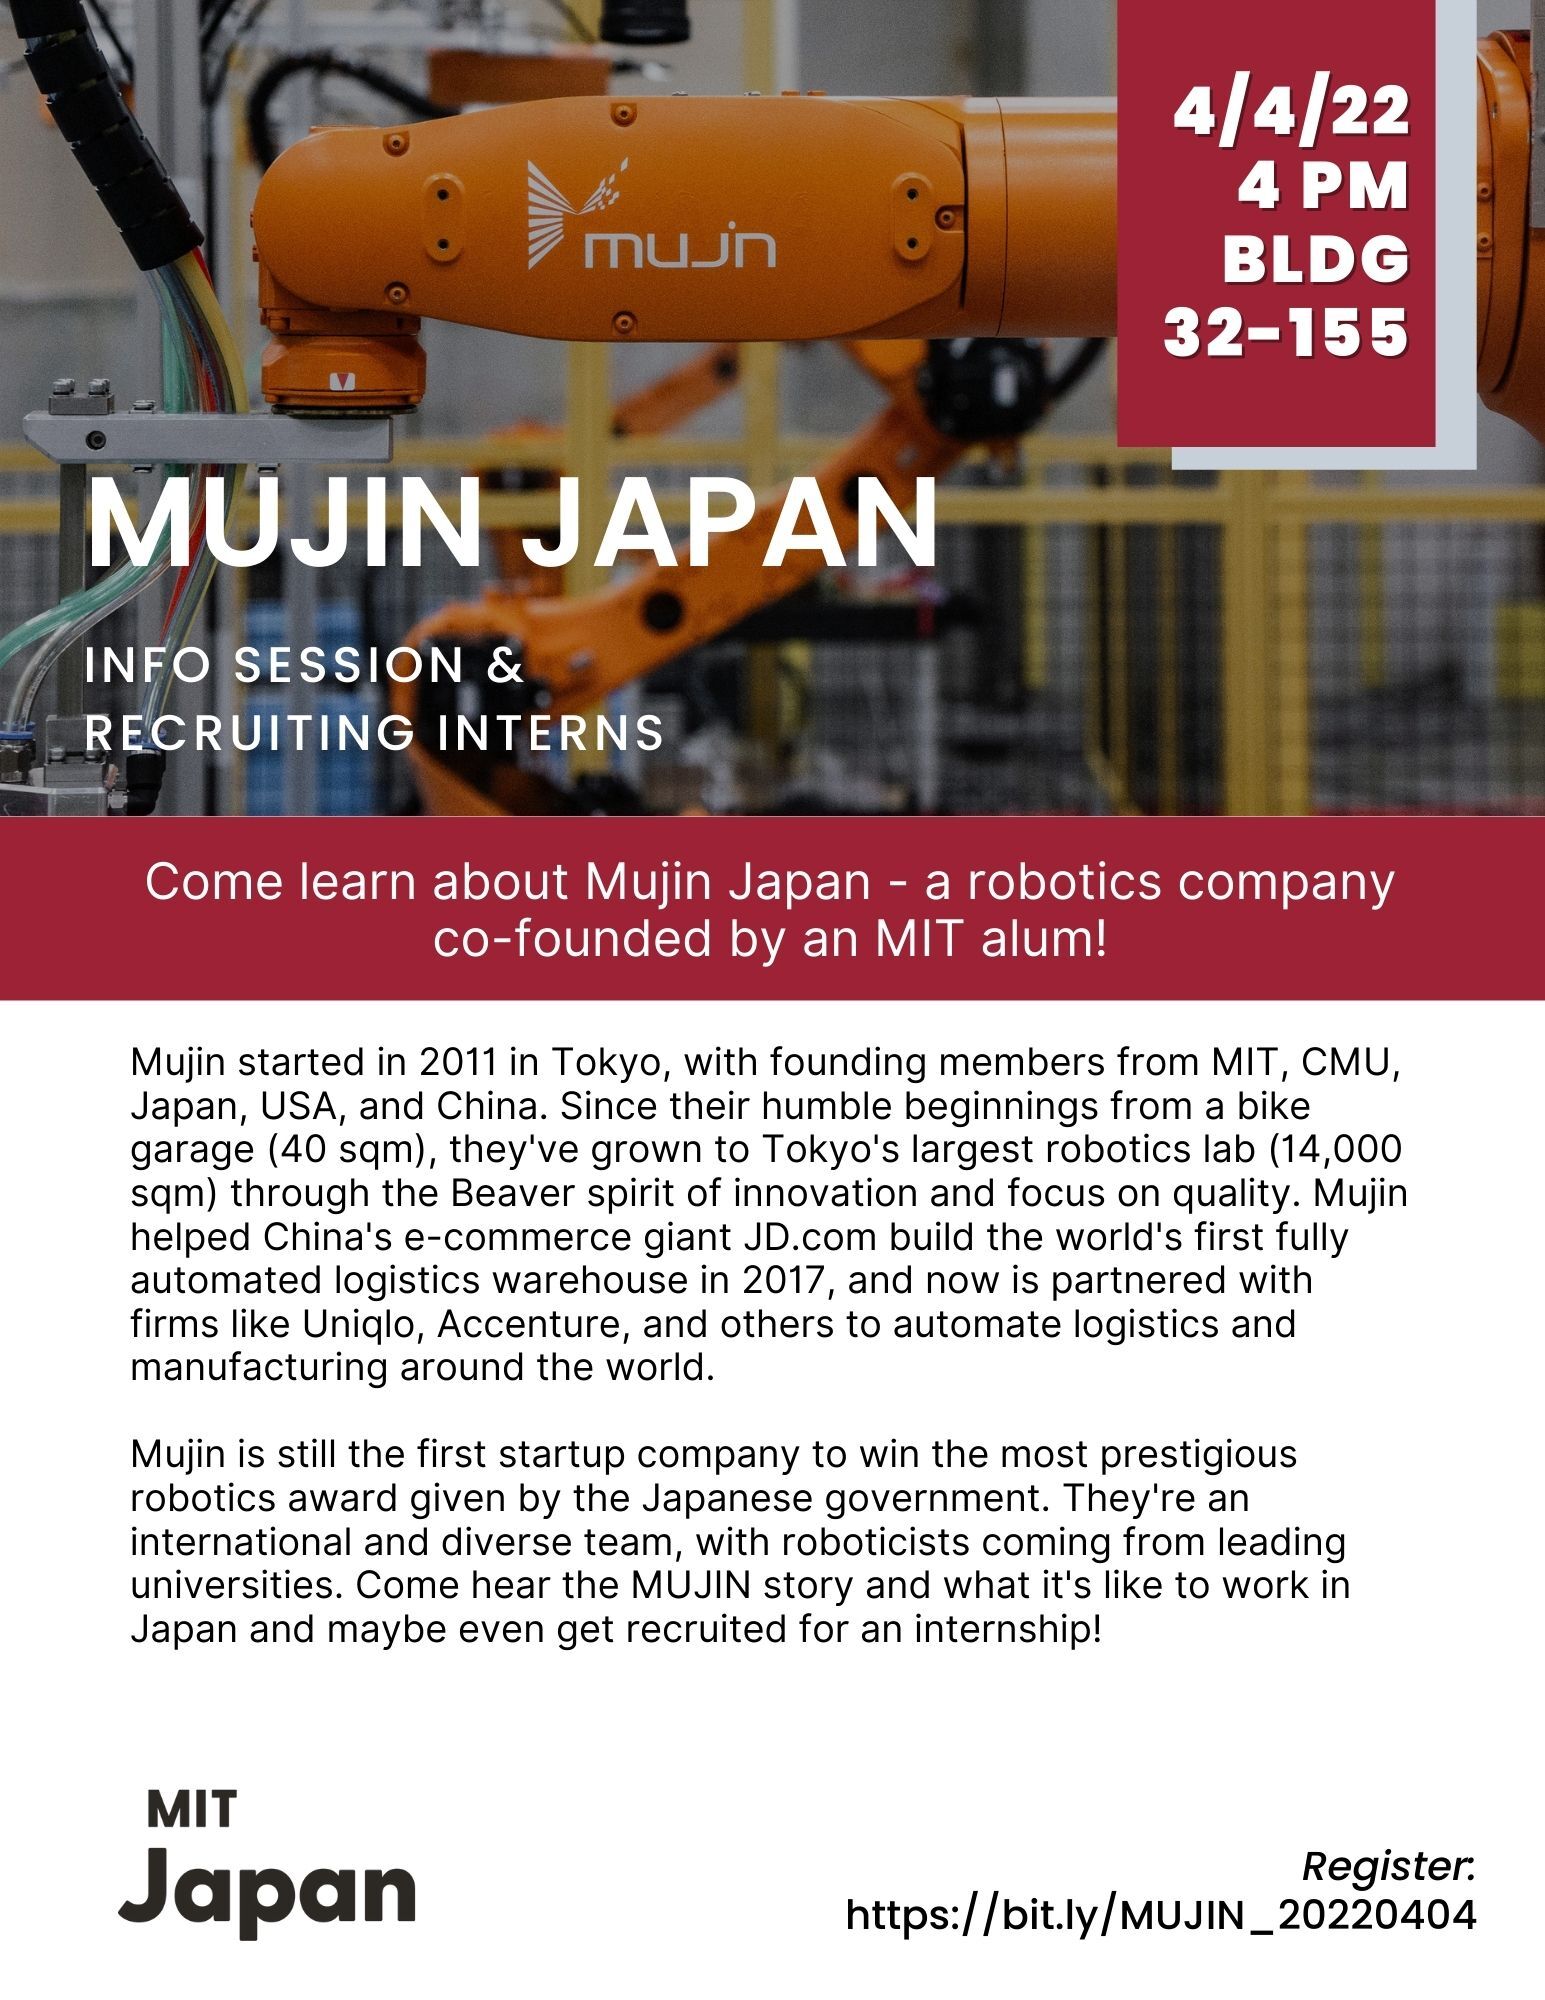 mujin japan info session event flyer